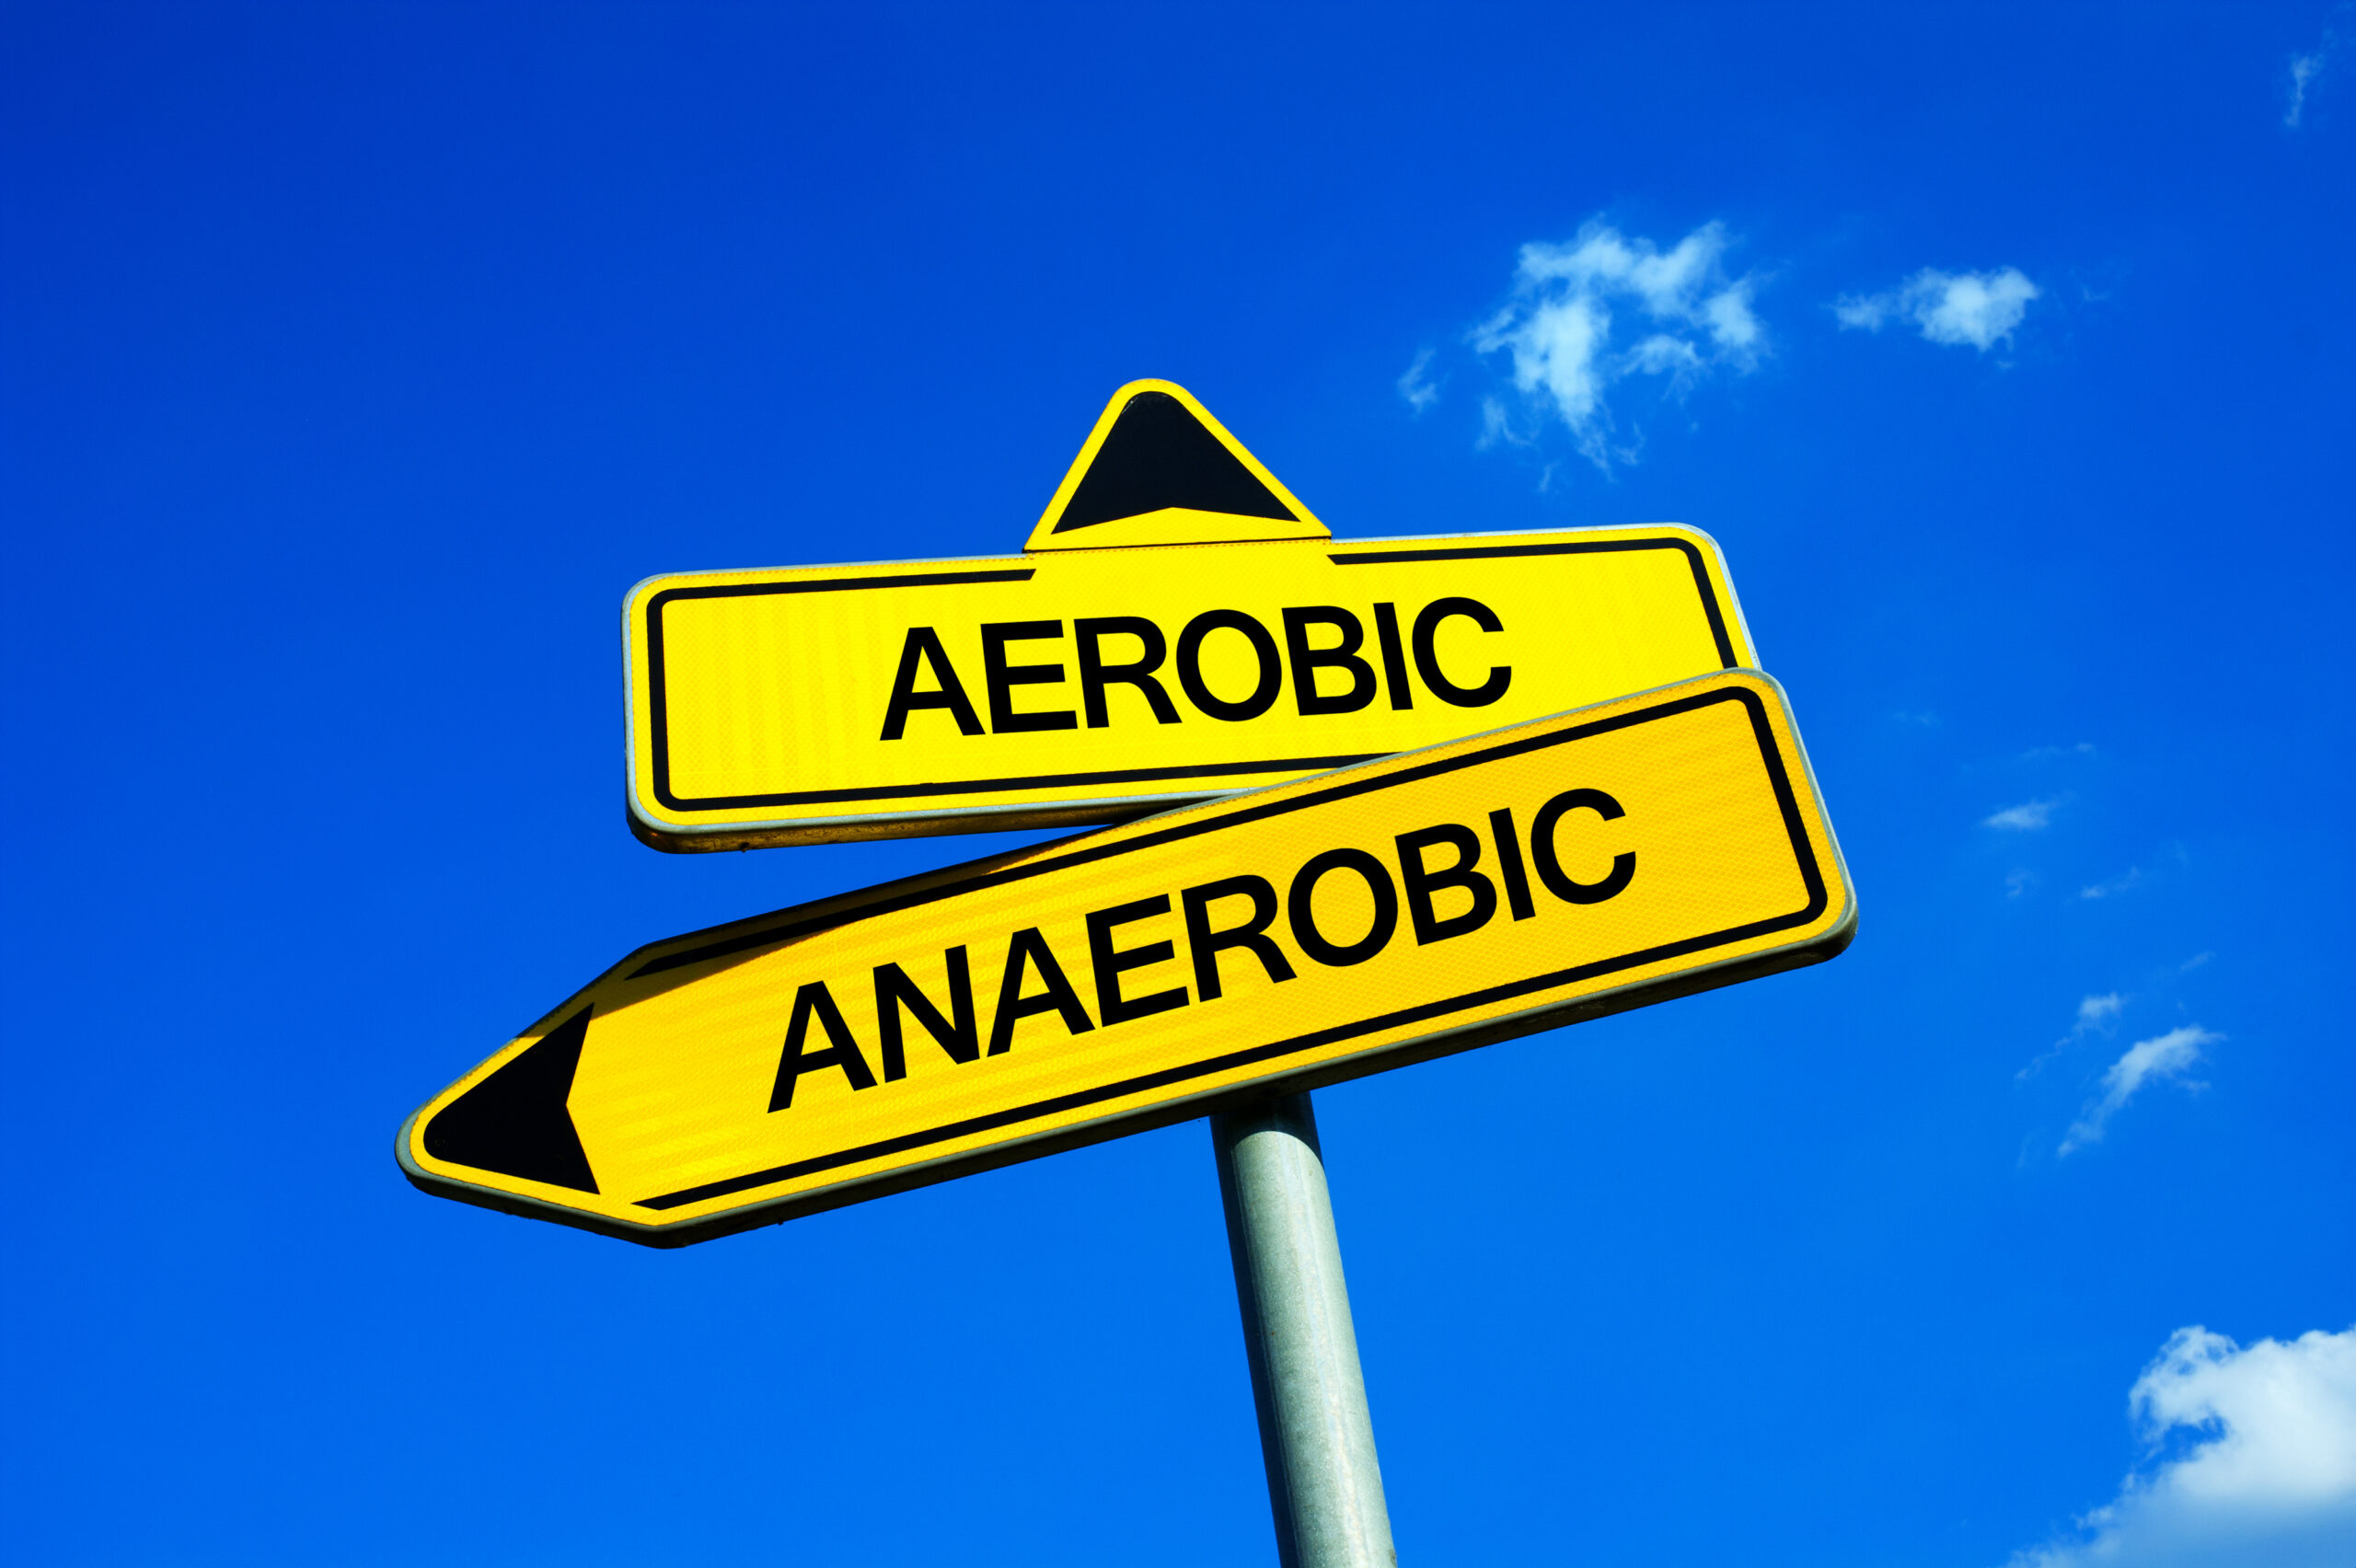 Allenamento anaerobico o aerobico per dimagrire? Rimarrai sorpreso